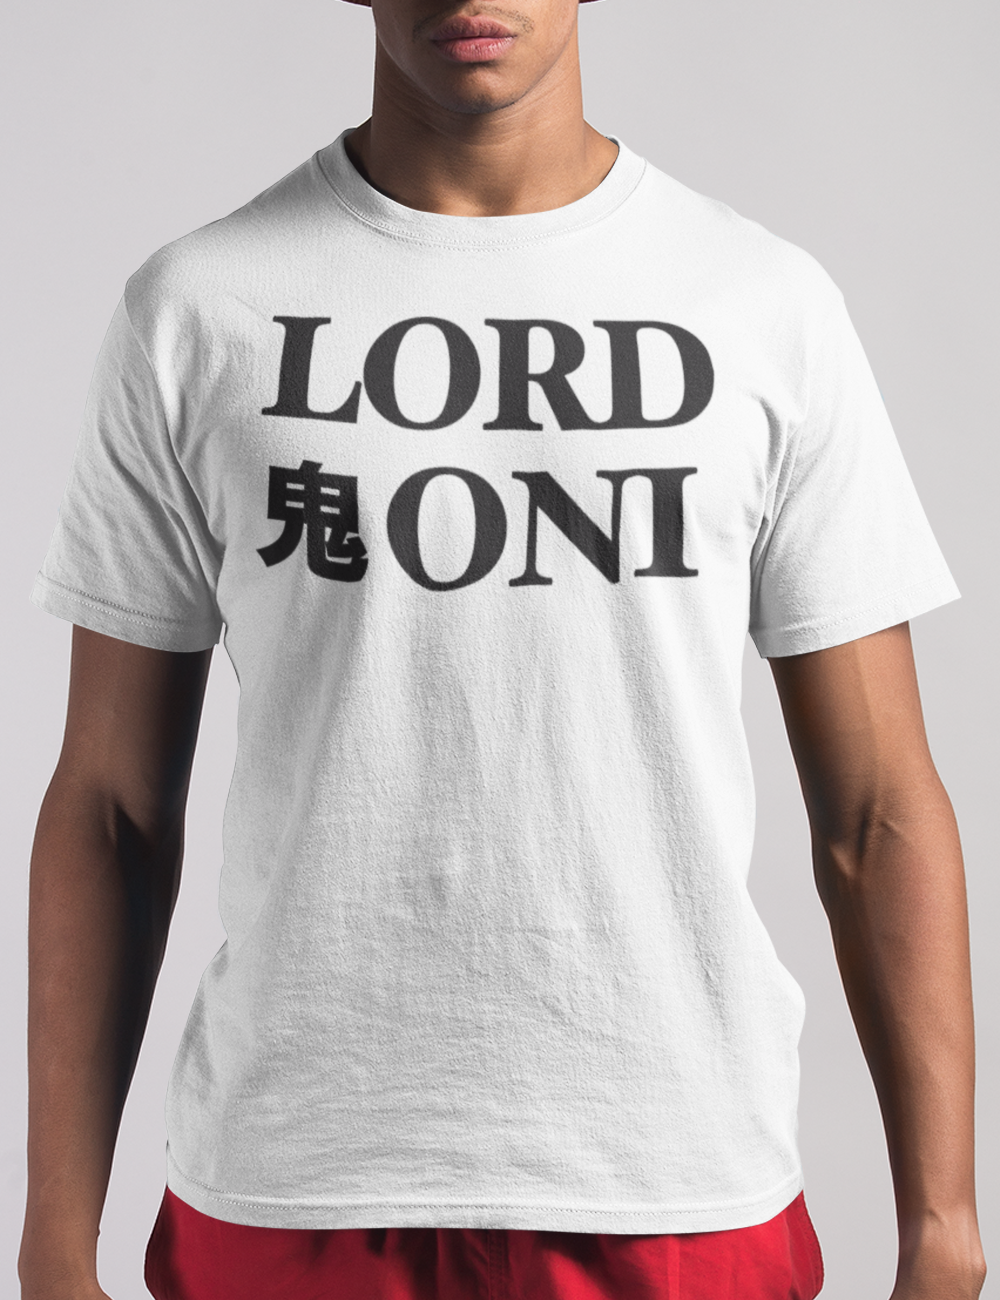 Lord Oni | T-Shirt OniTakai